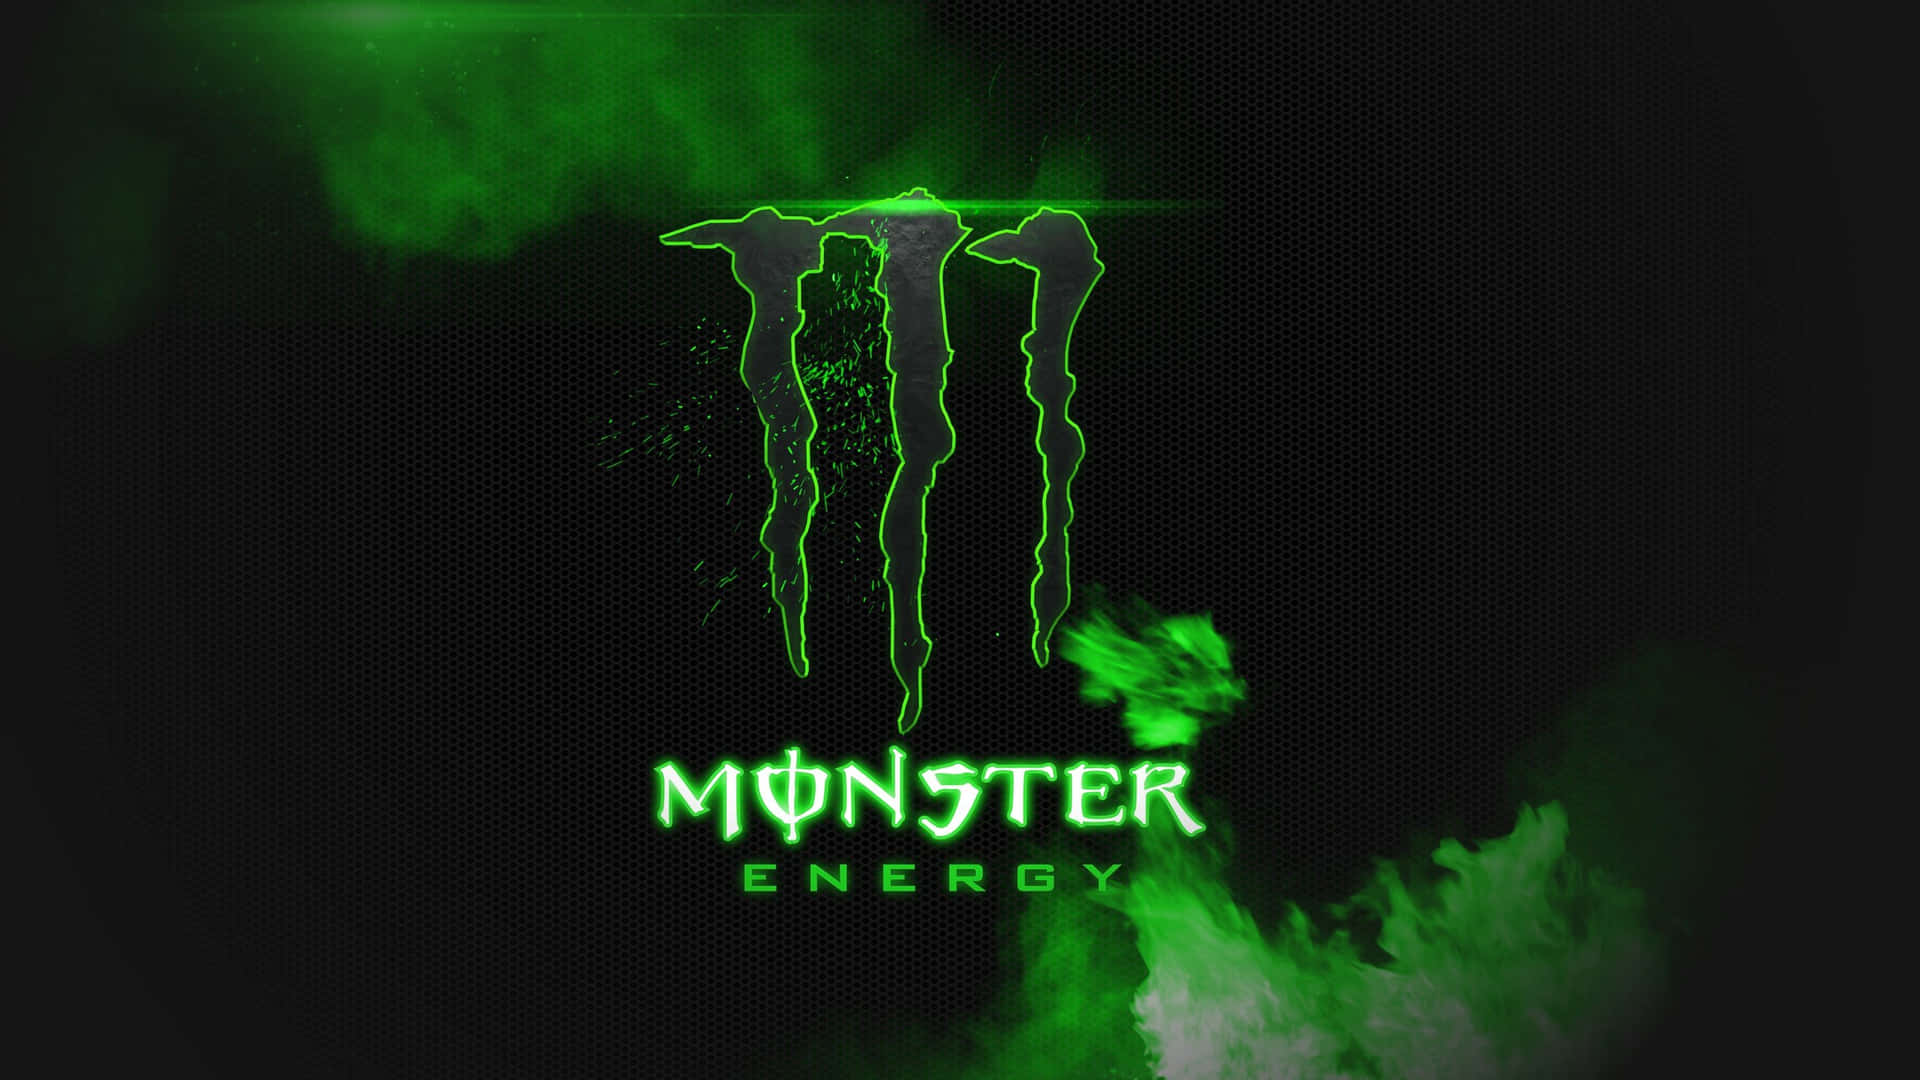 Monster Energy Logo on Grungy Background